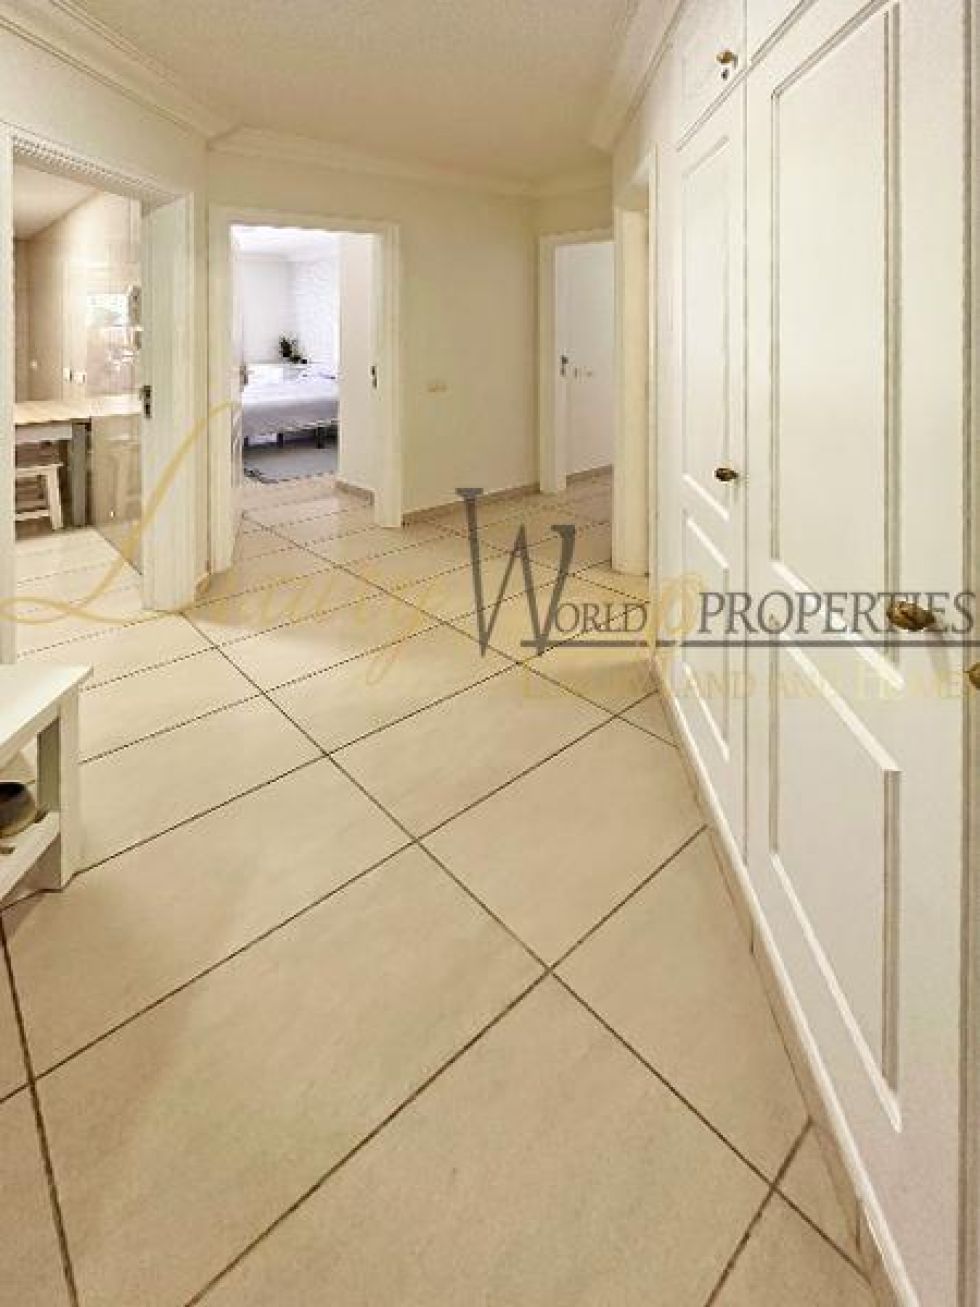 Apartment for sale in  Costa Adeje, Spain - LWP4310 Terrazas del Duque - Costa Adeje